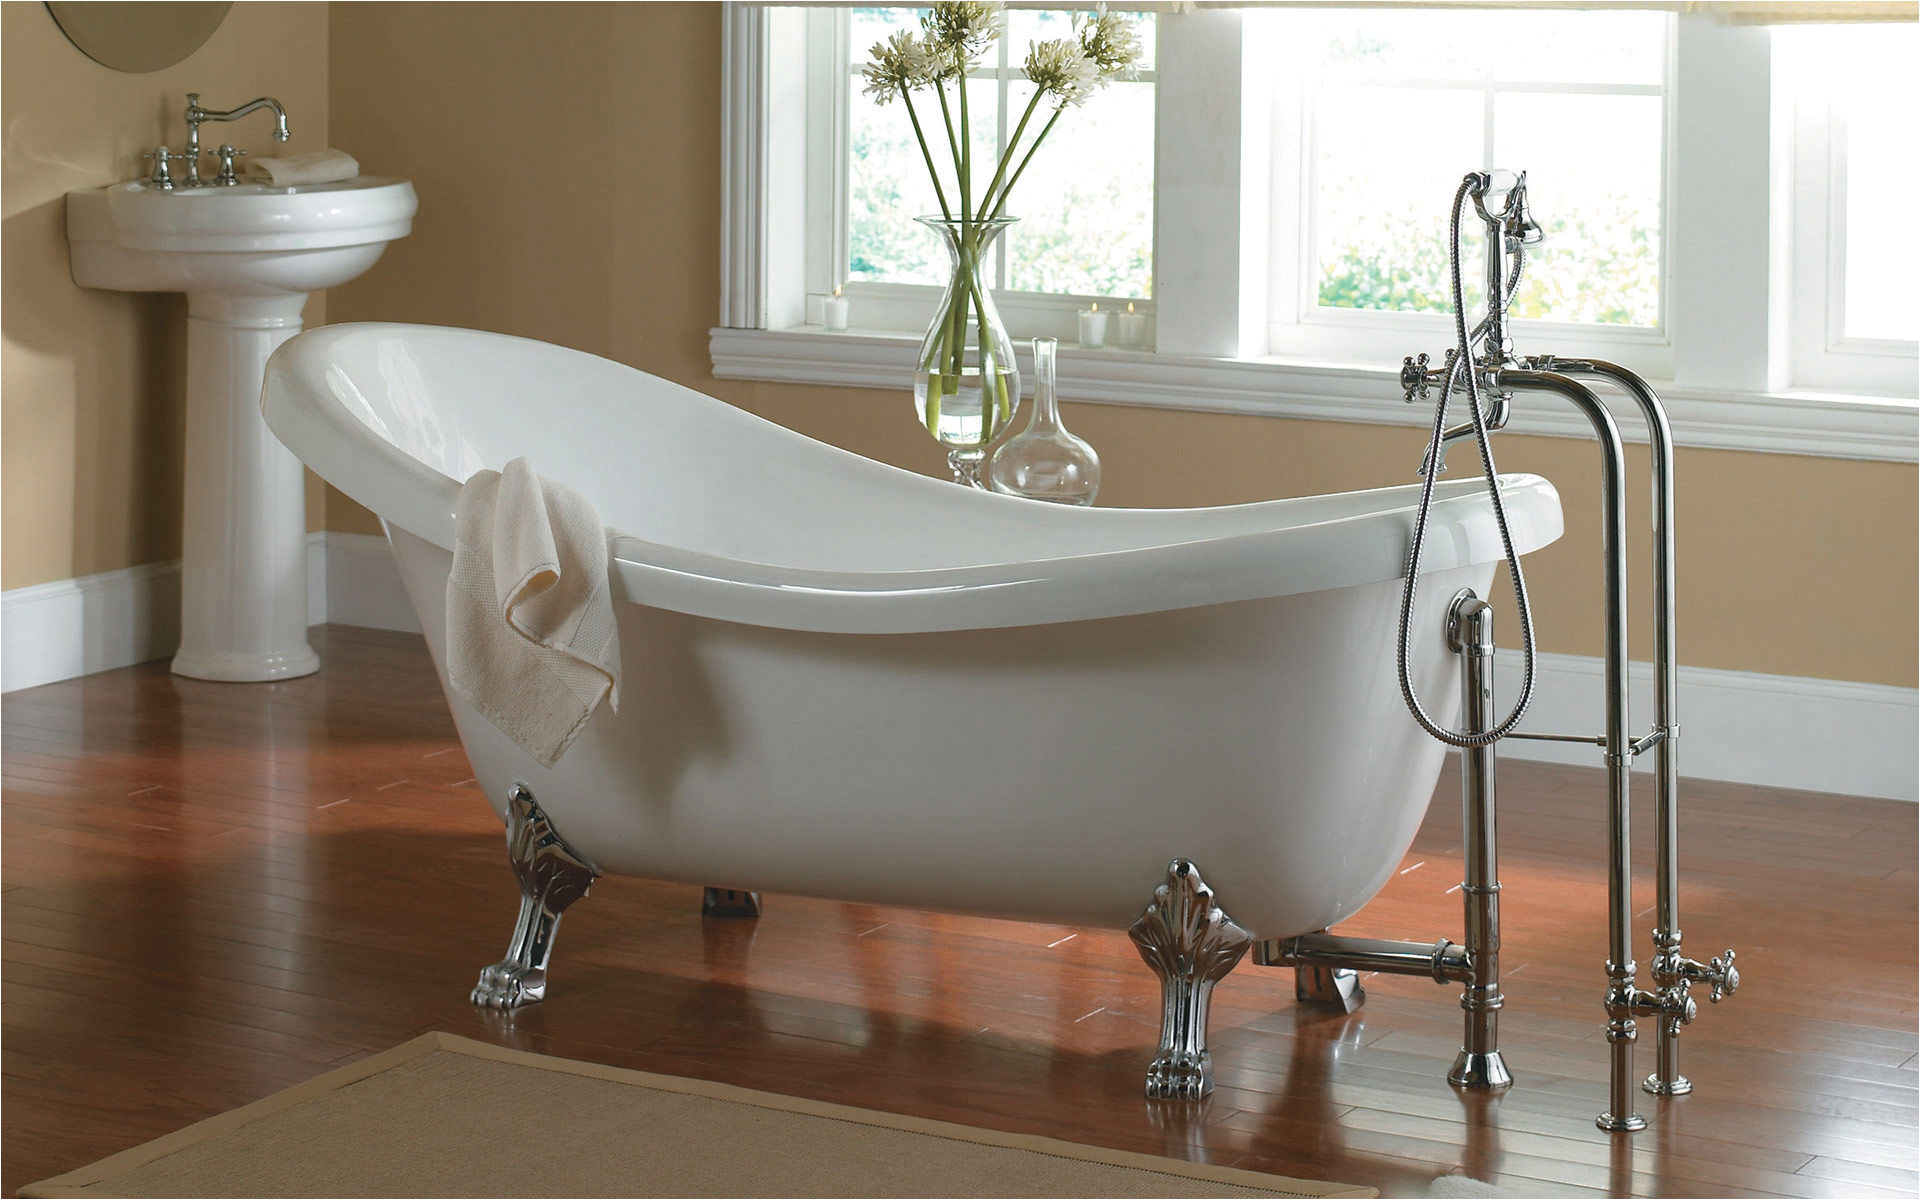 classy stainless steel bathtub for bathroom design